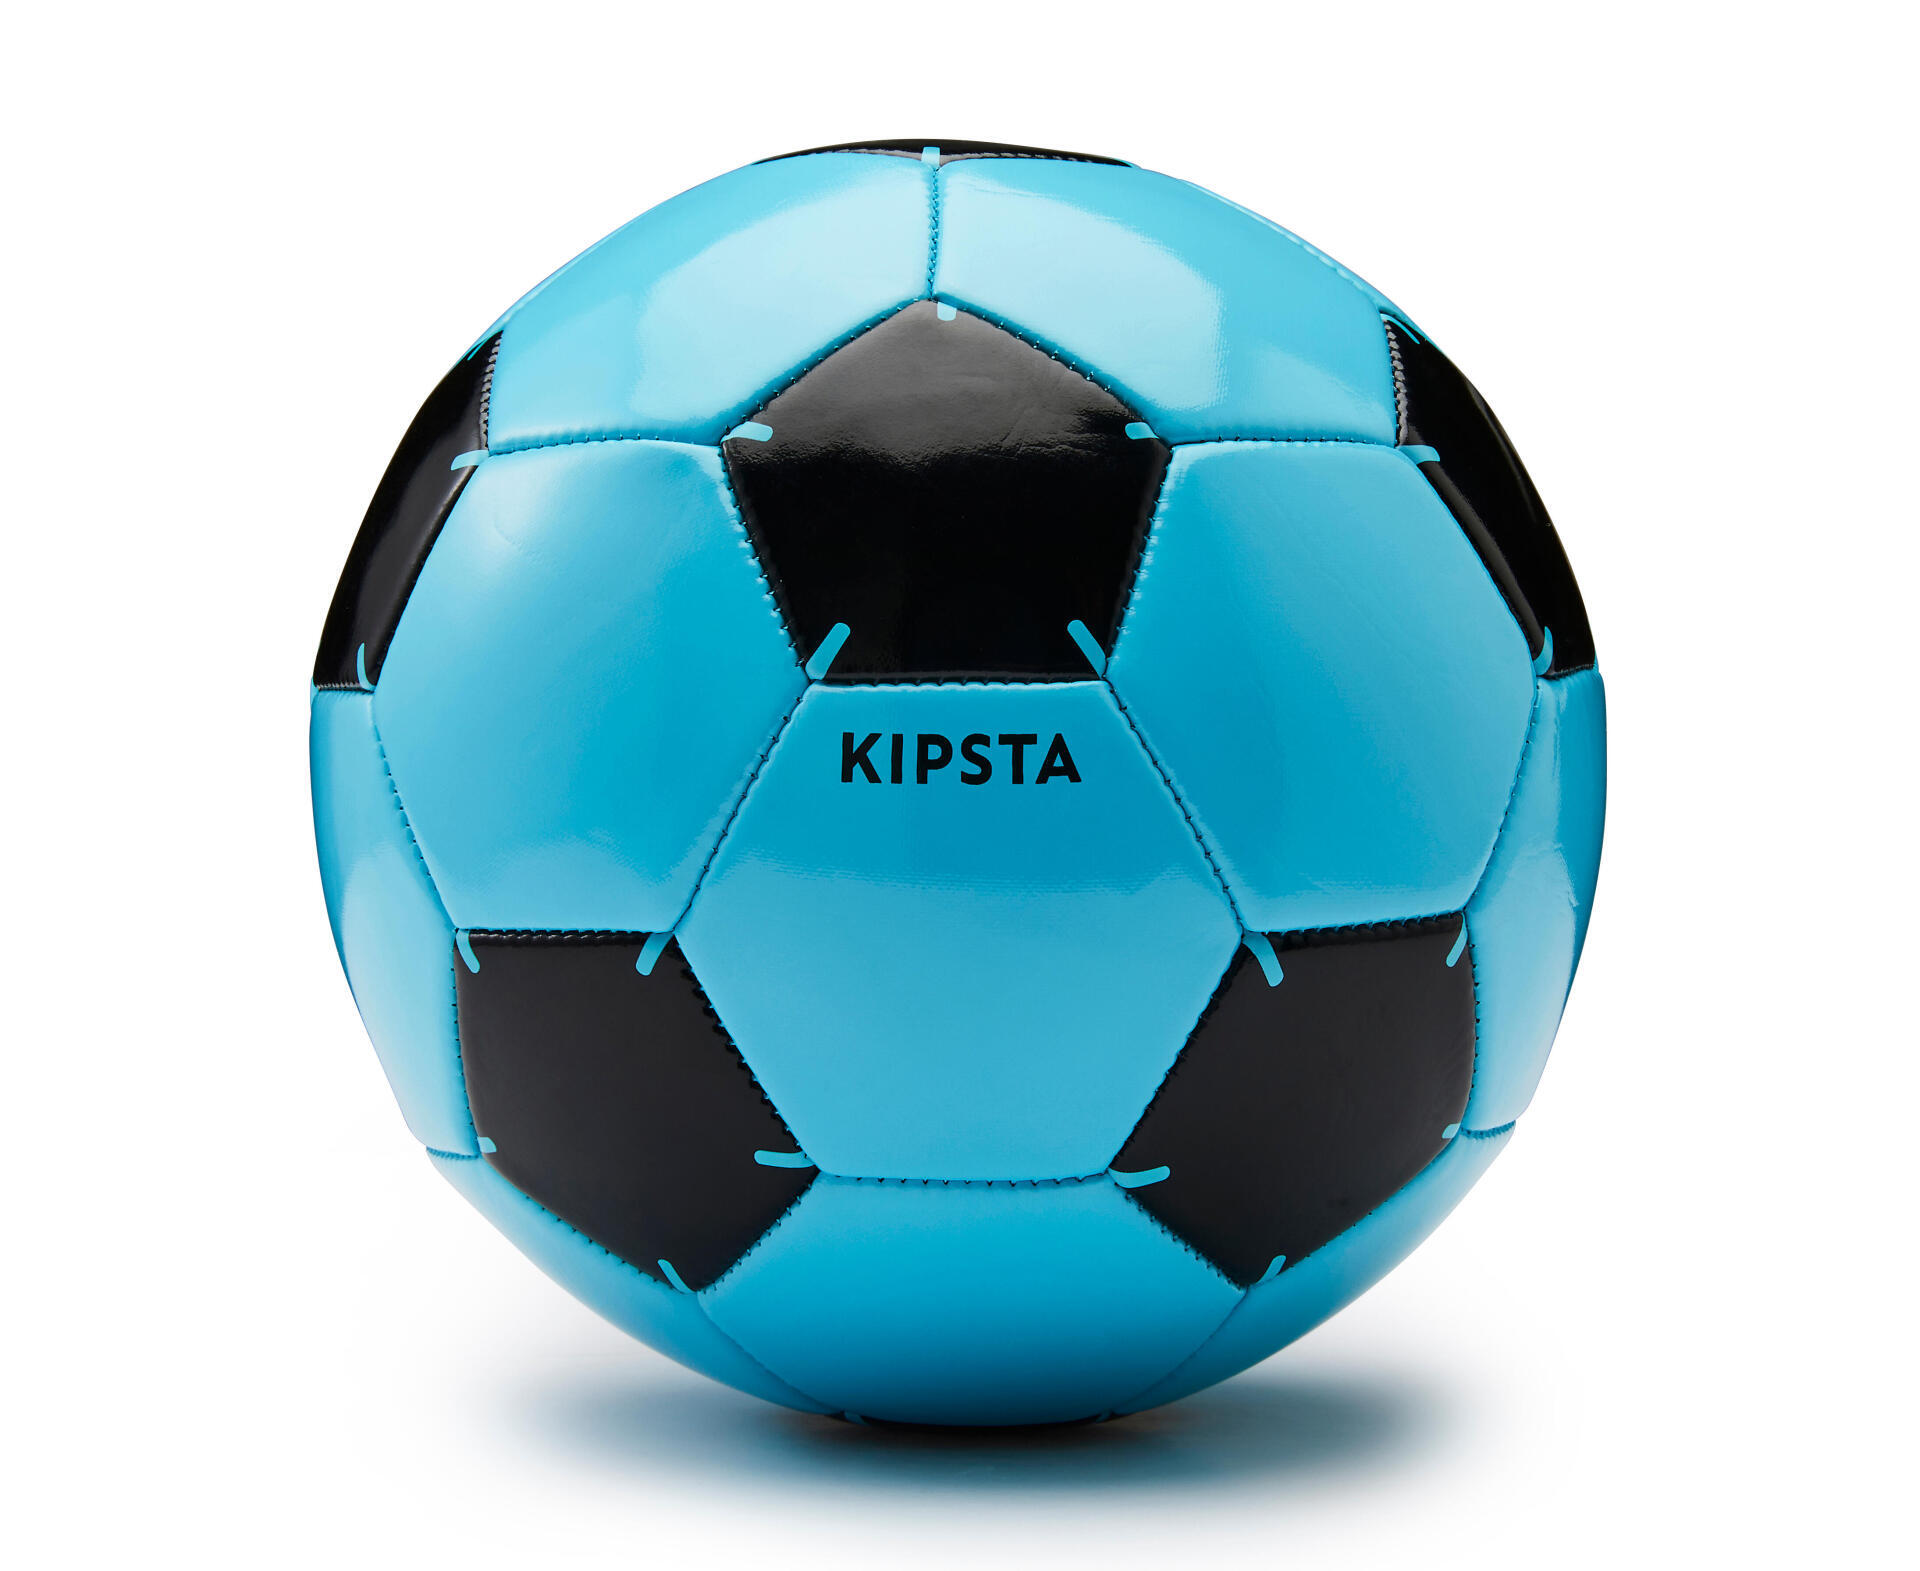 Kipsta First Kick S3